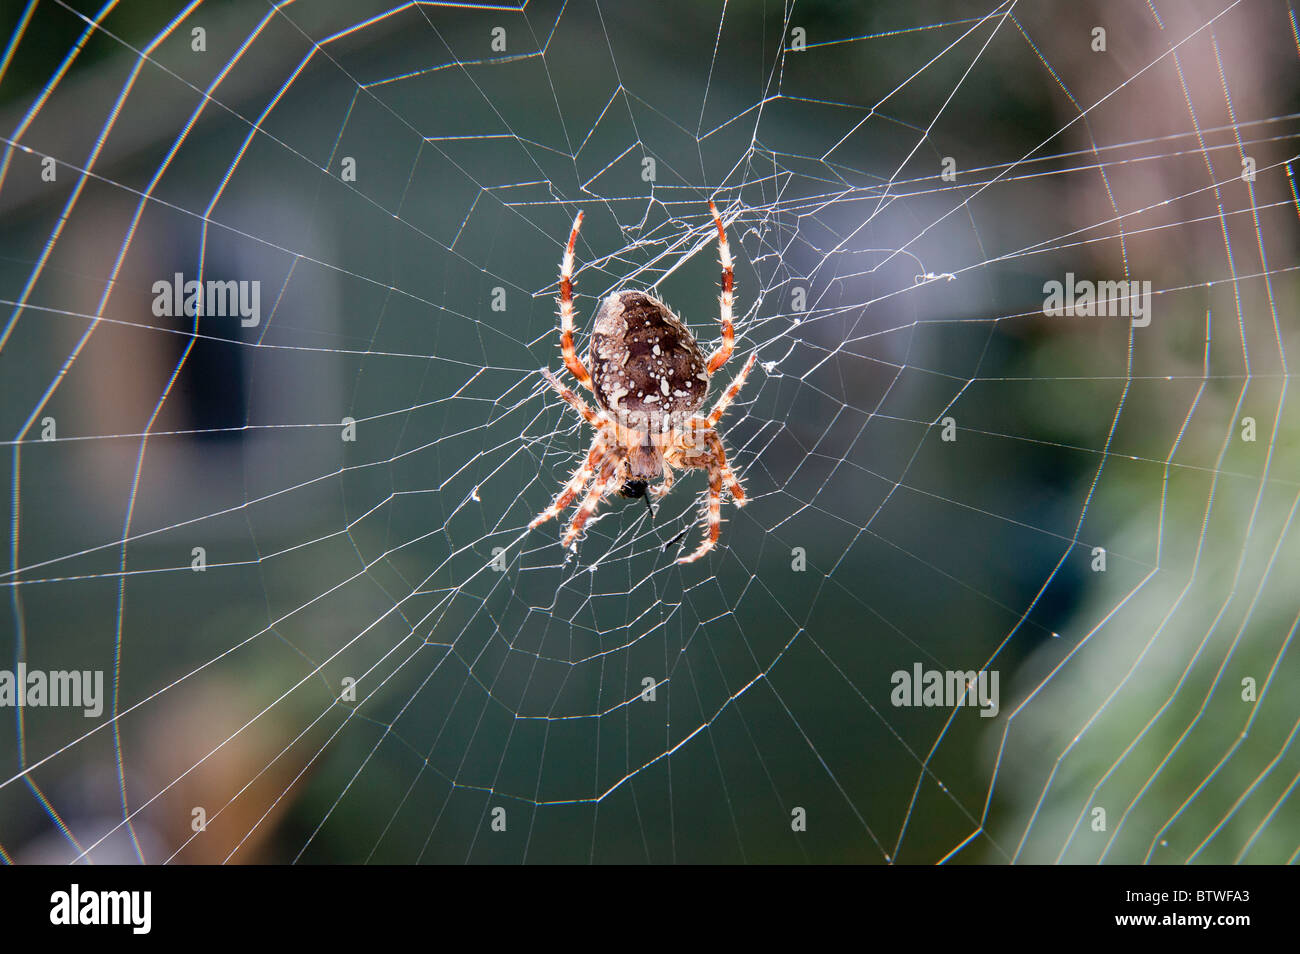 GARDEN SPIDER FEEDING ON FLY ON WEB Stock Photo